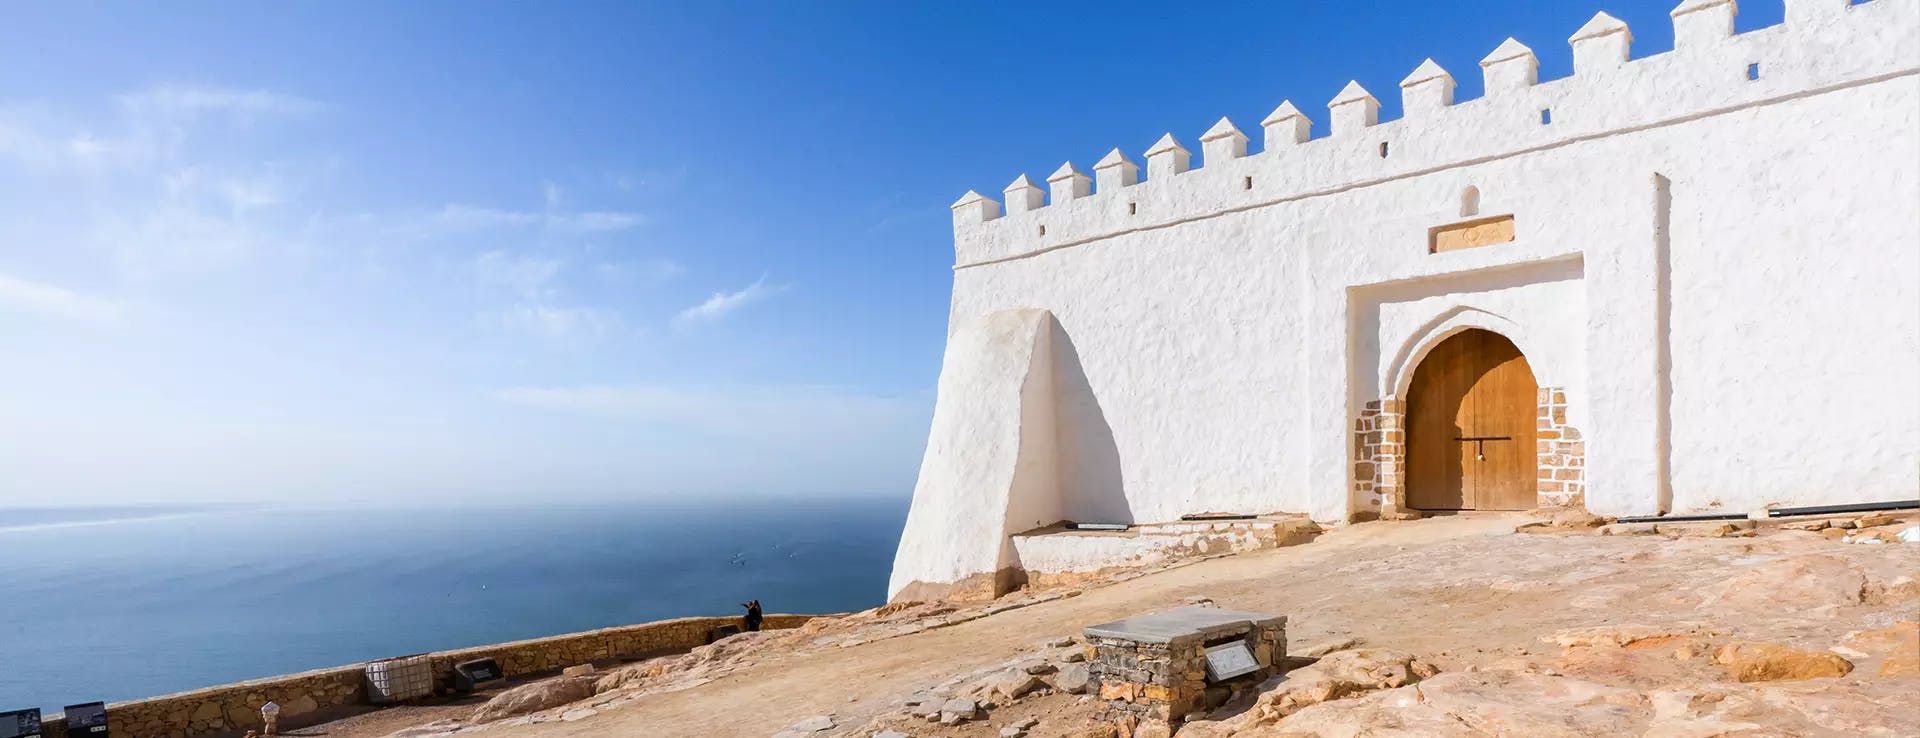 Agadir Oufella : une forteresse historique unique